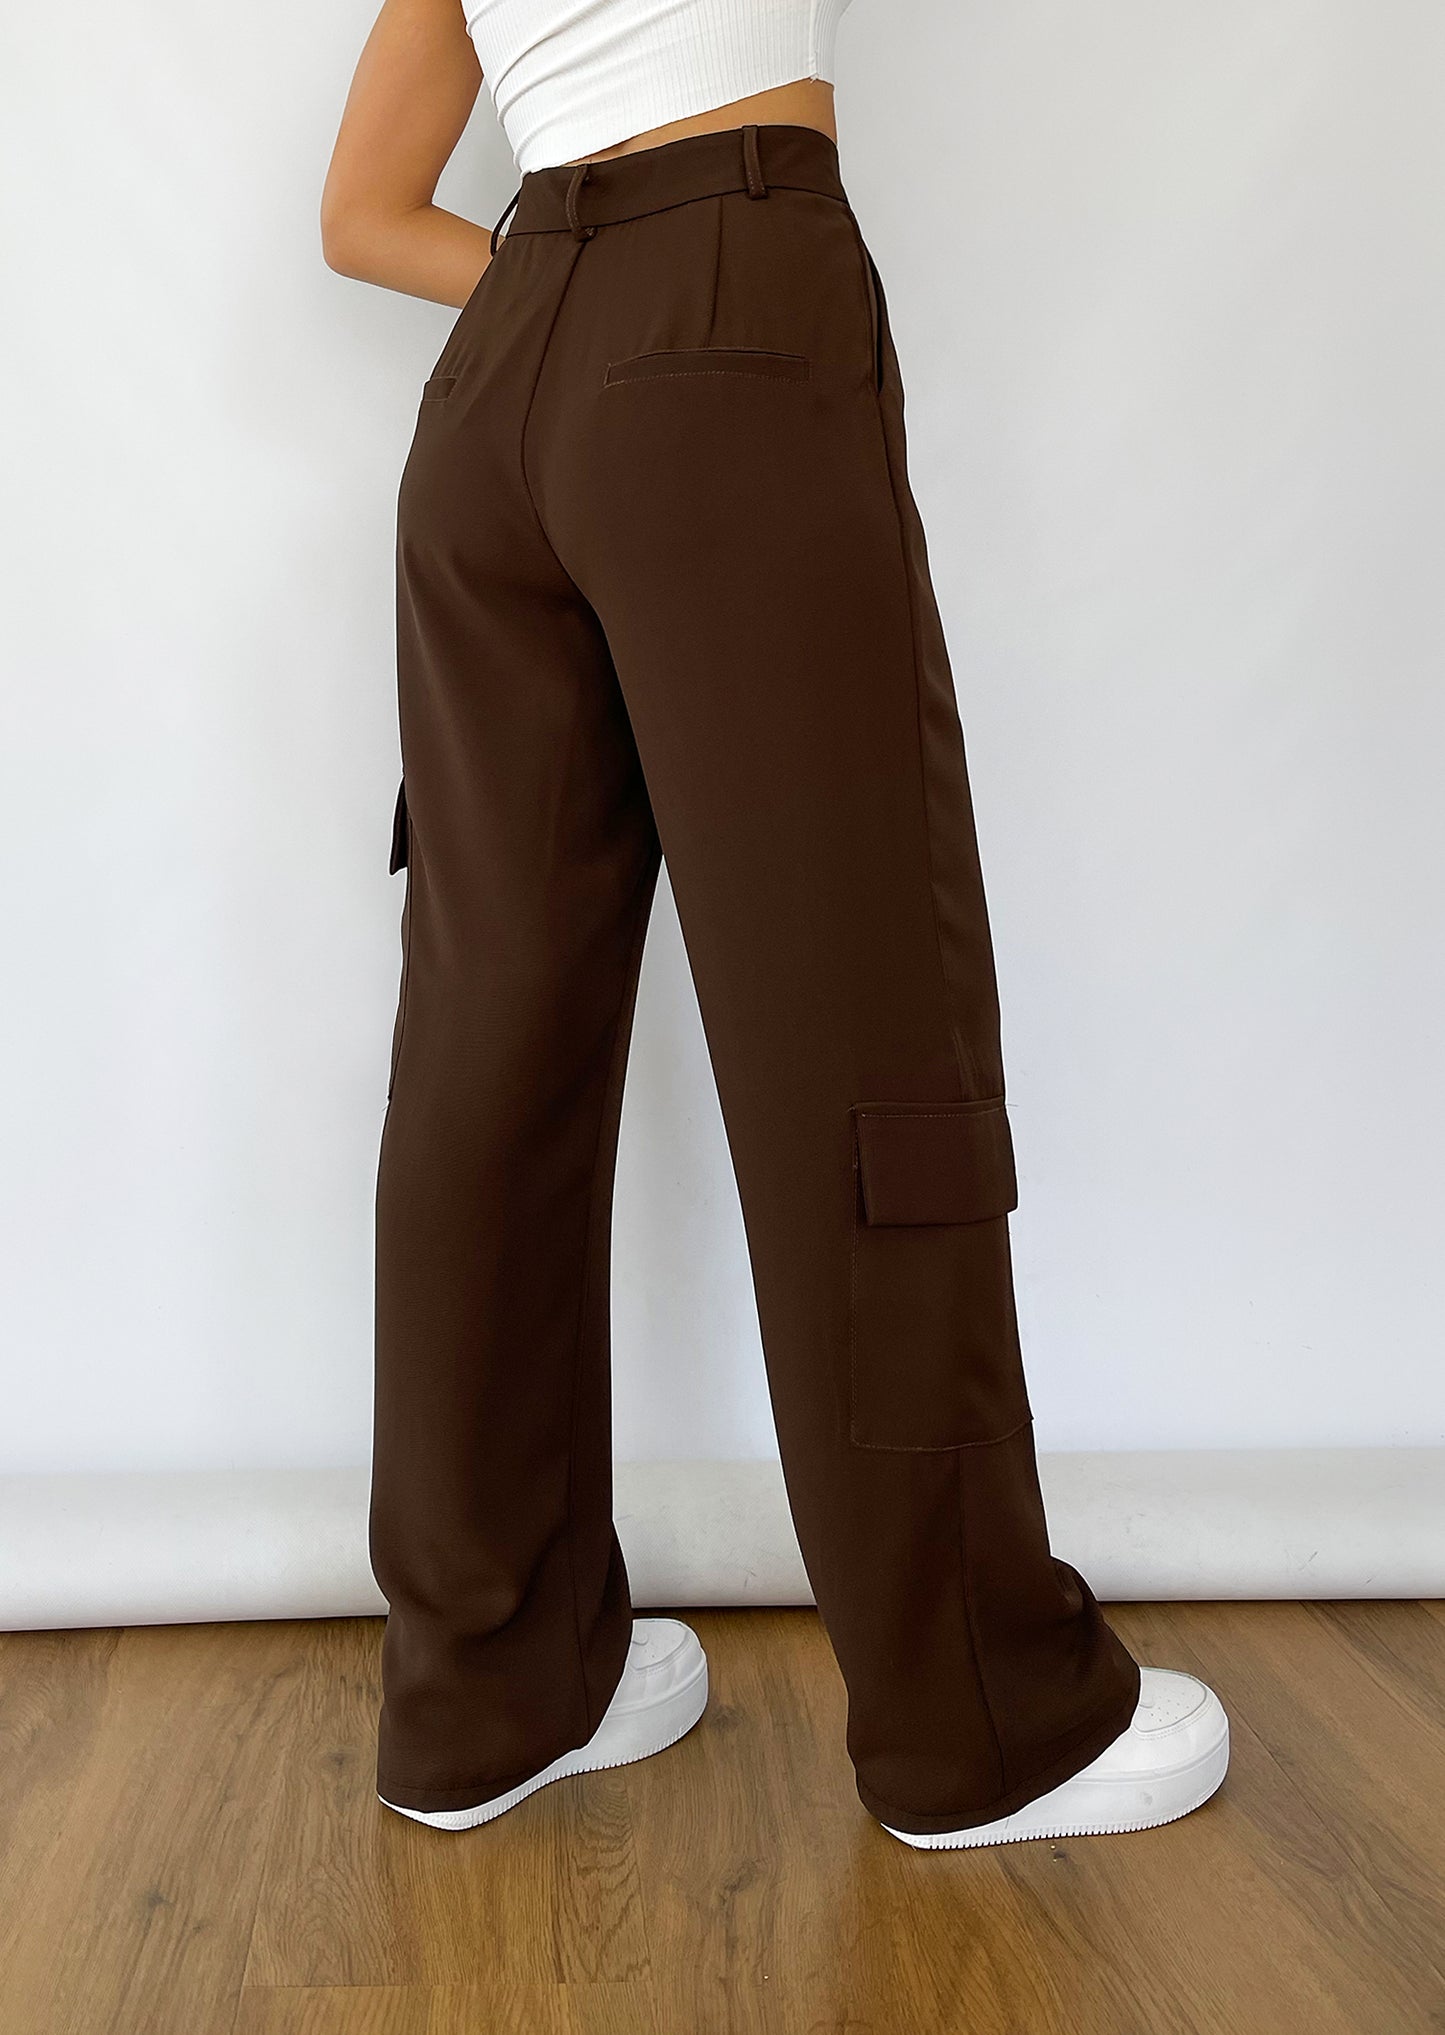 Pantalon cargo large marron